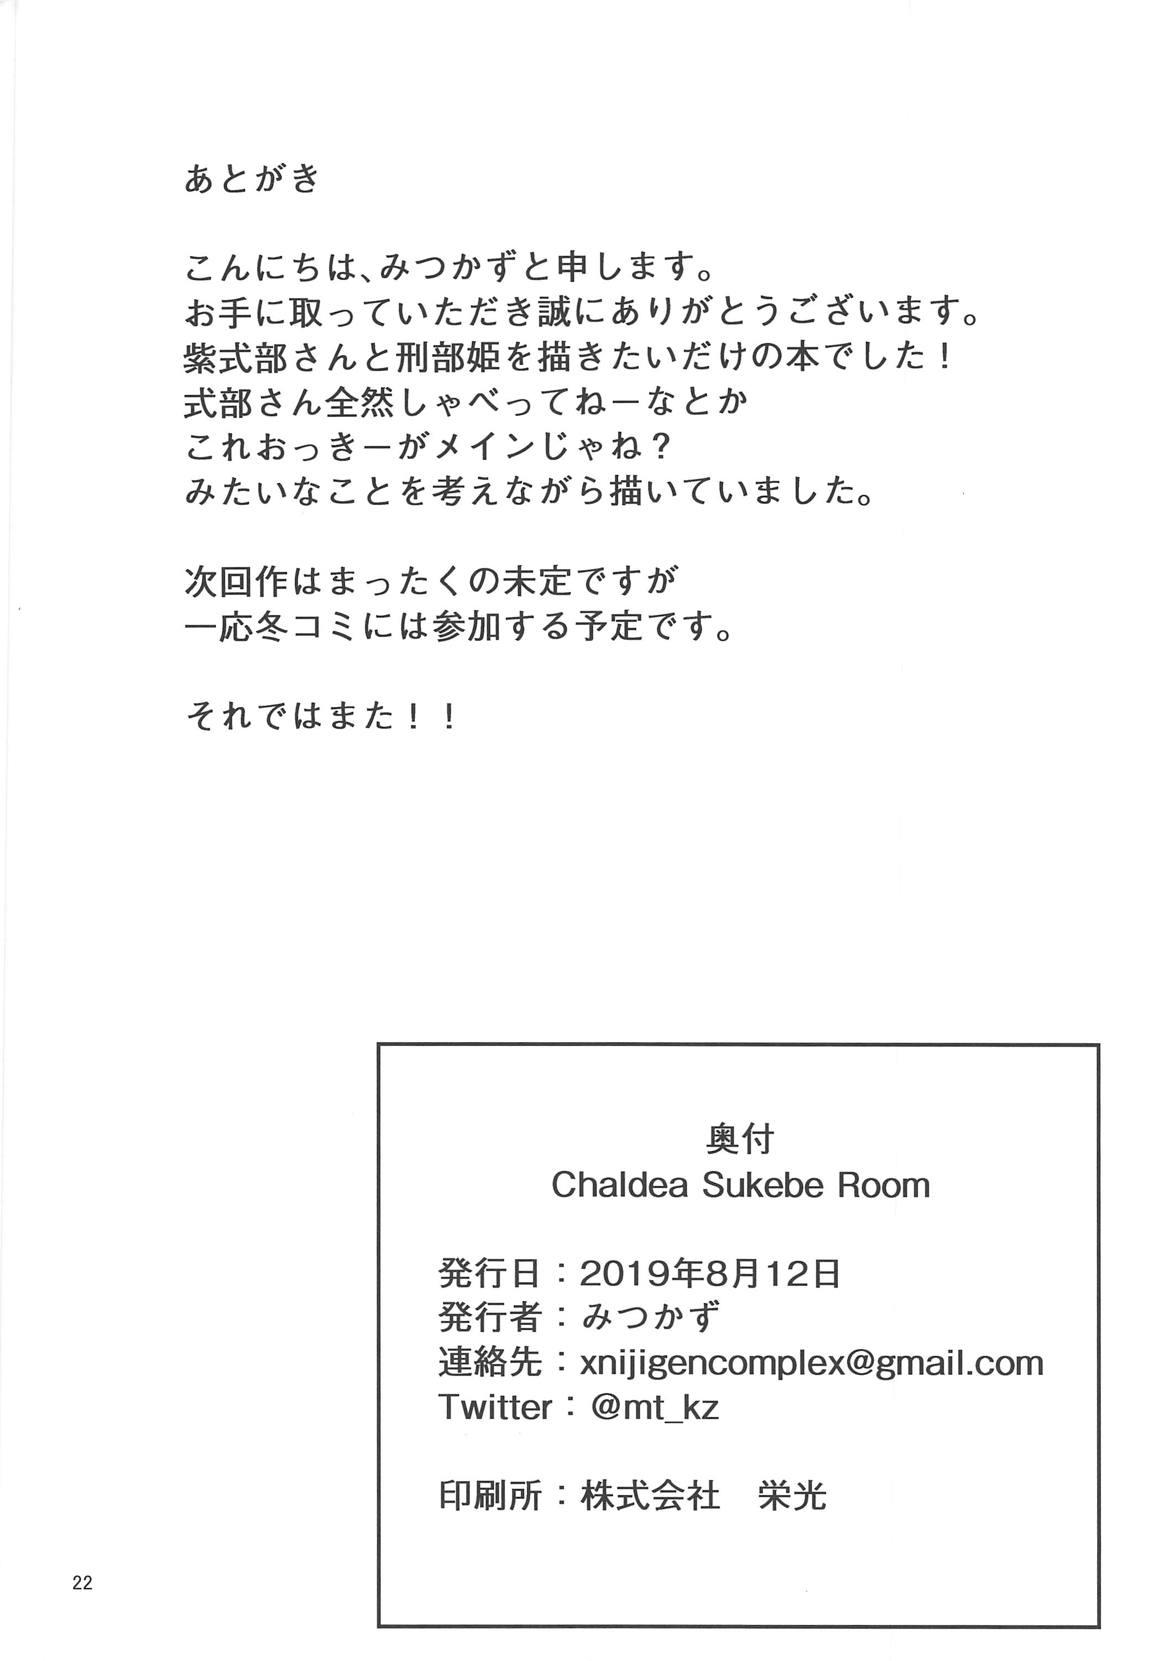 Chaldea Sukebe Room 18